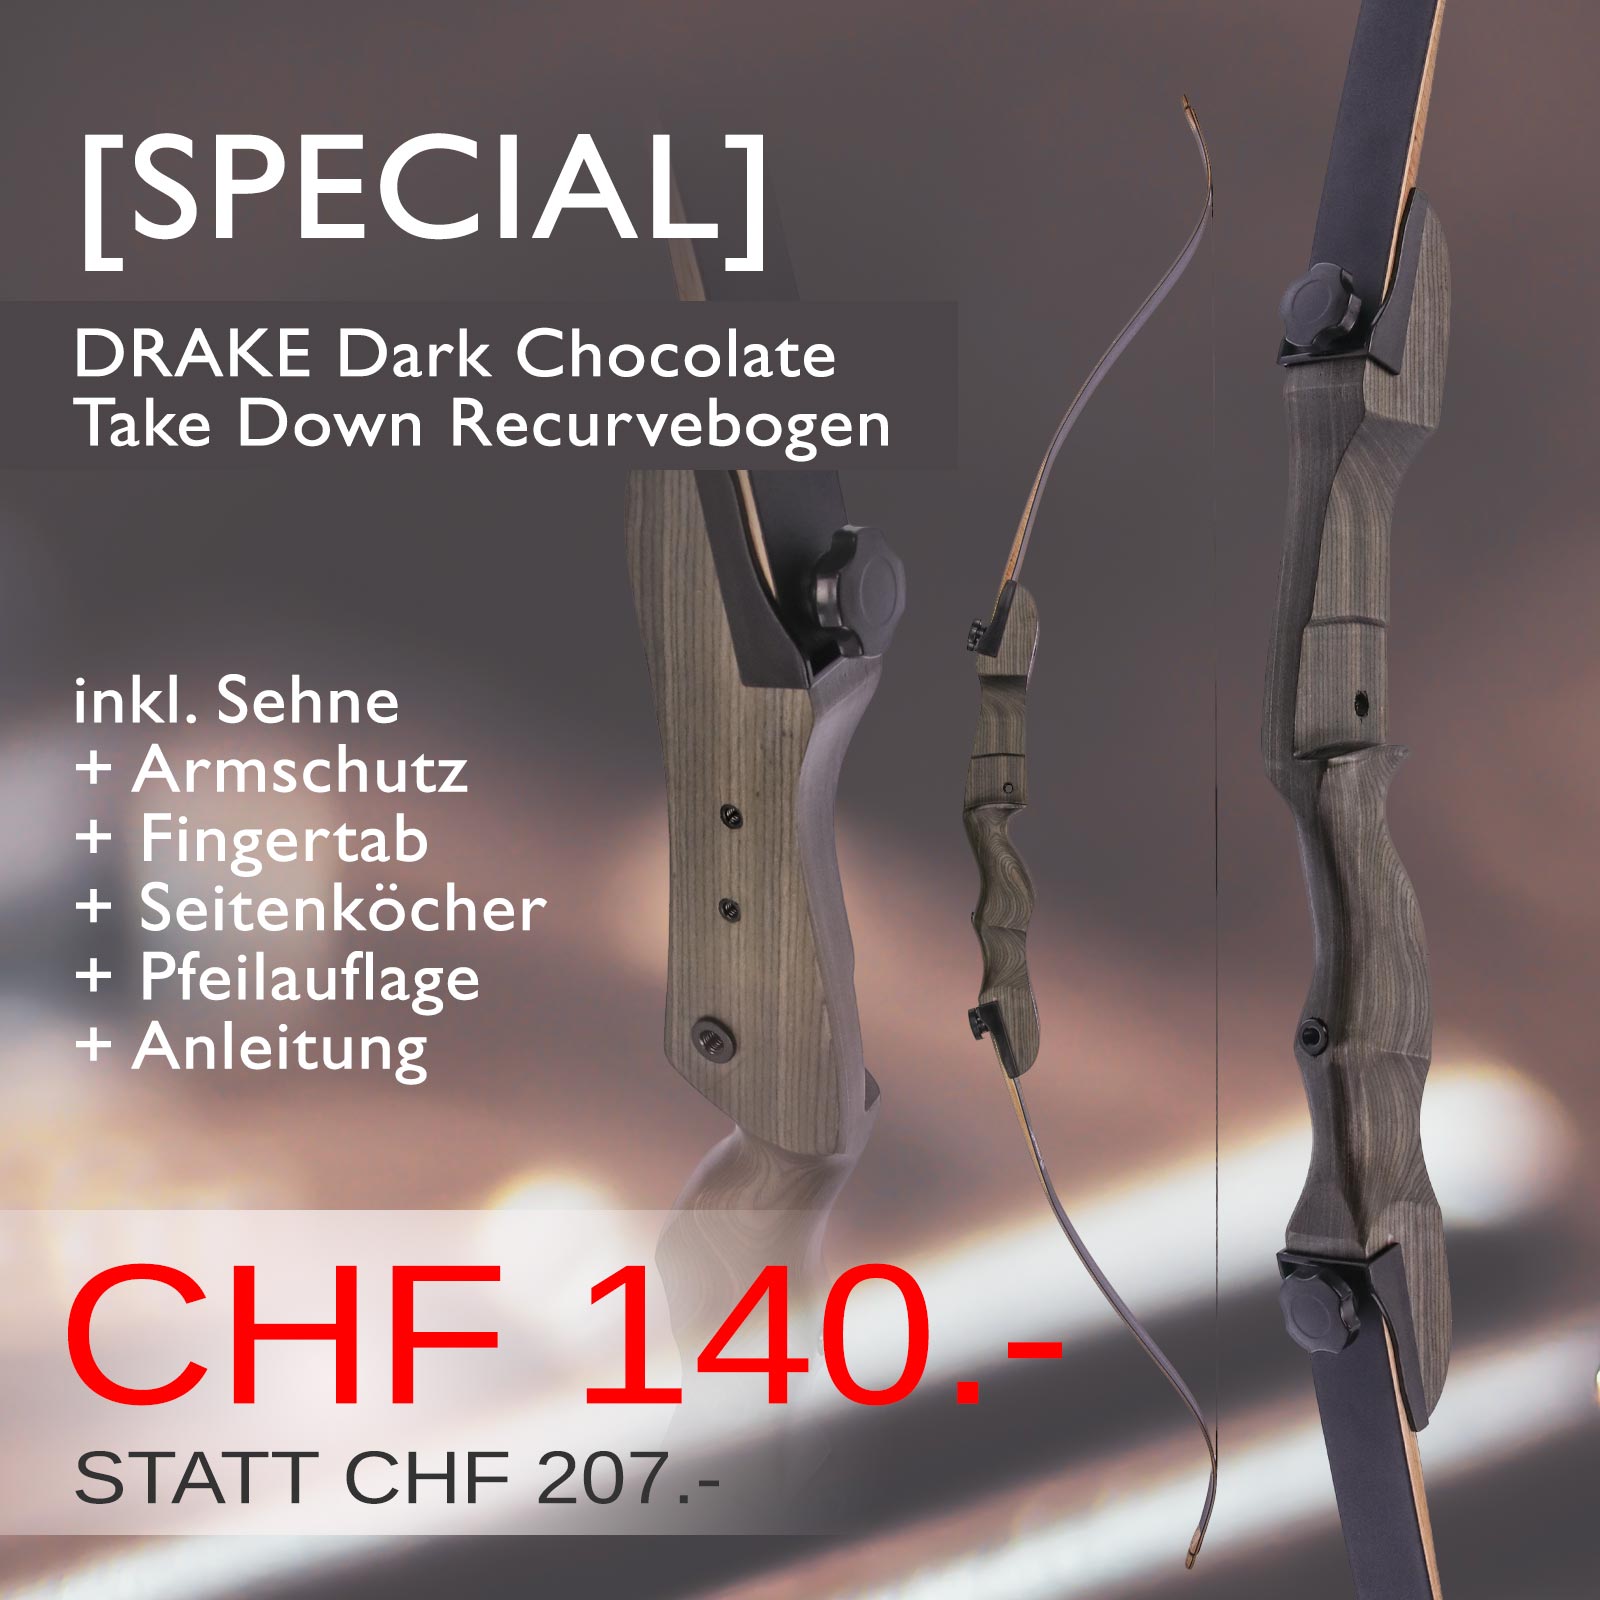 SPECIAL DRAKE Dark Chocolate Recurvebogen